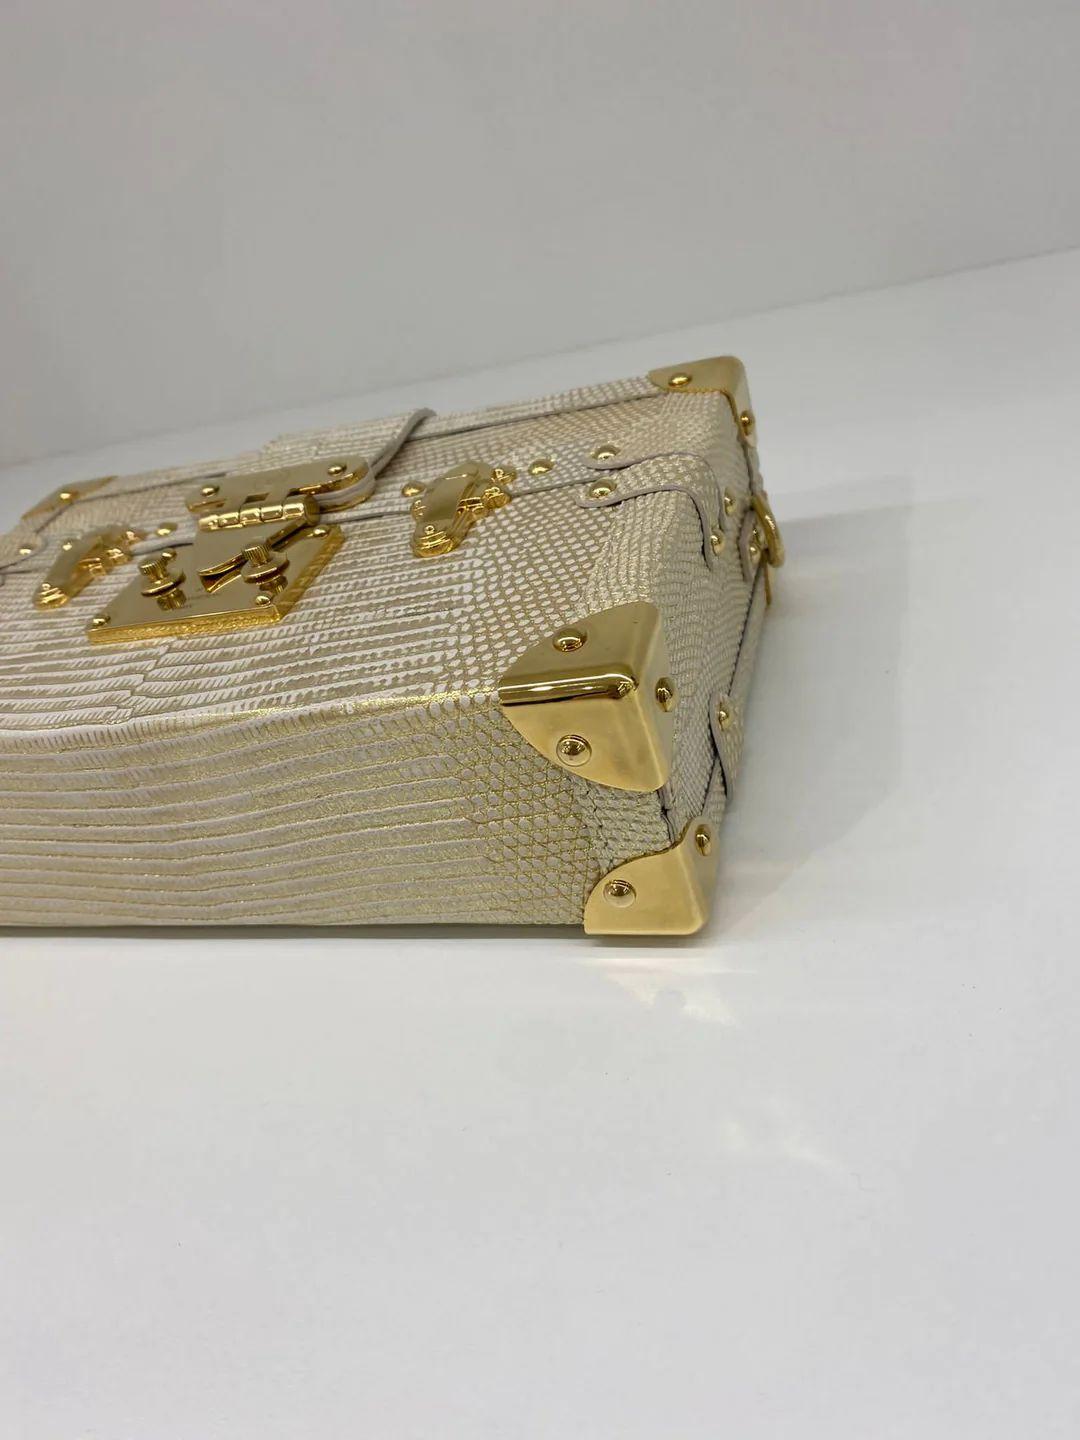 Women's or Men's Louis Vuitton Petite Malle Lizard Gold For Sale